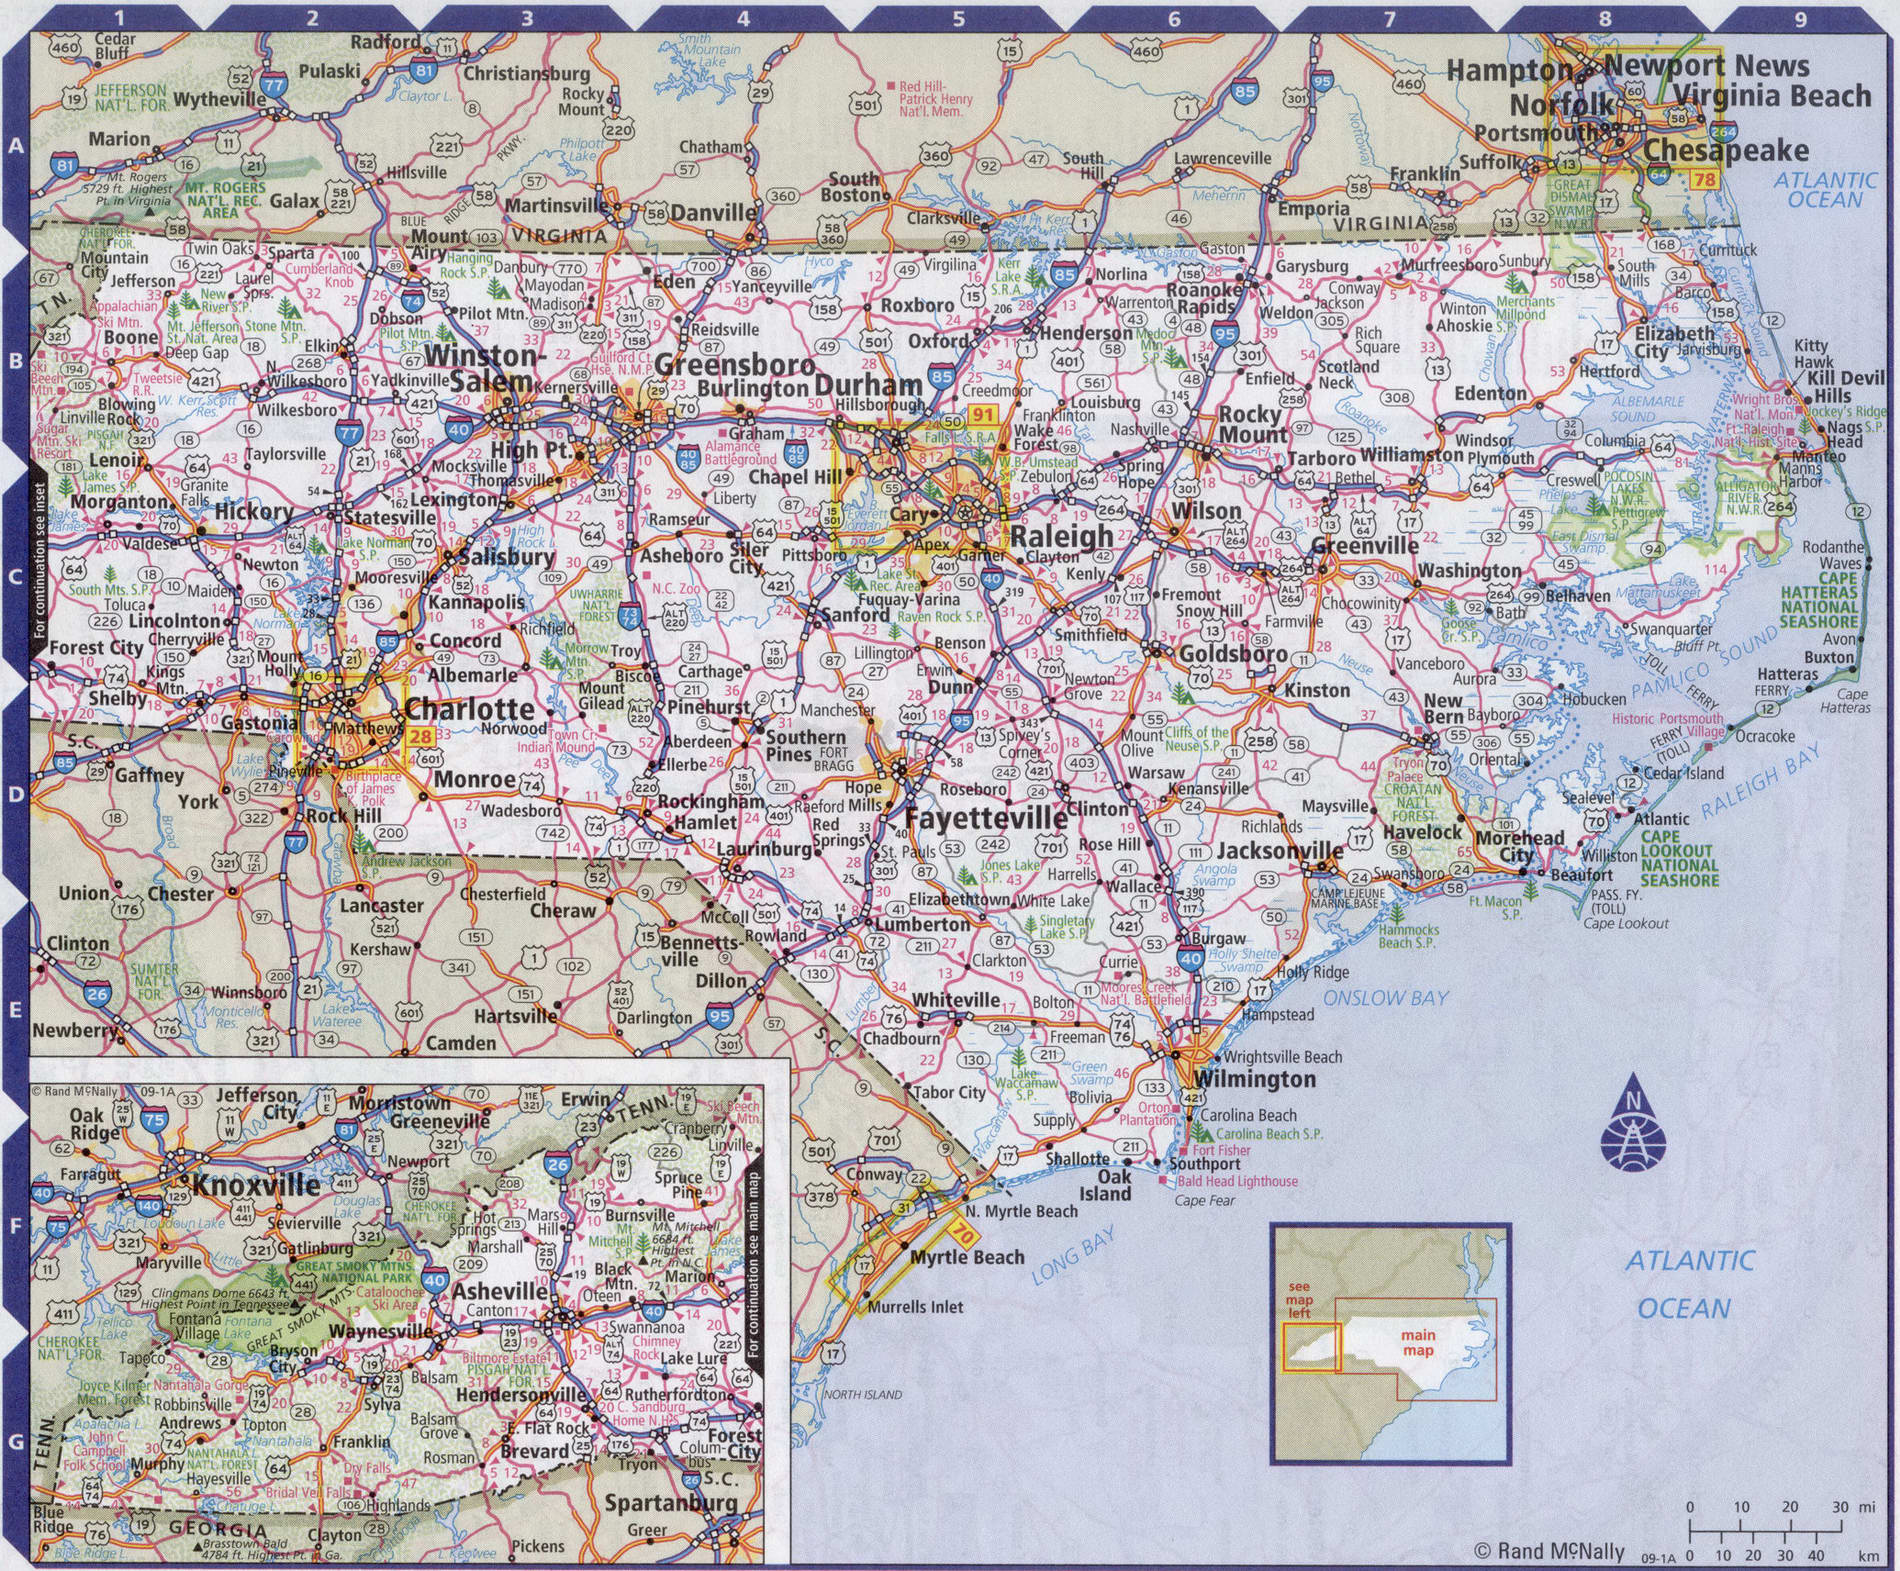 printable-maps-of-north-carolina